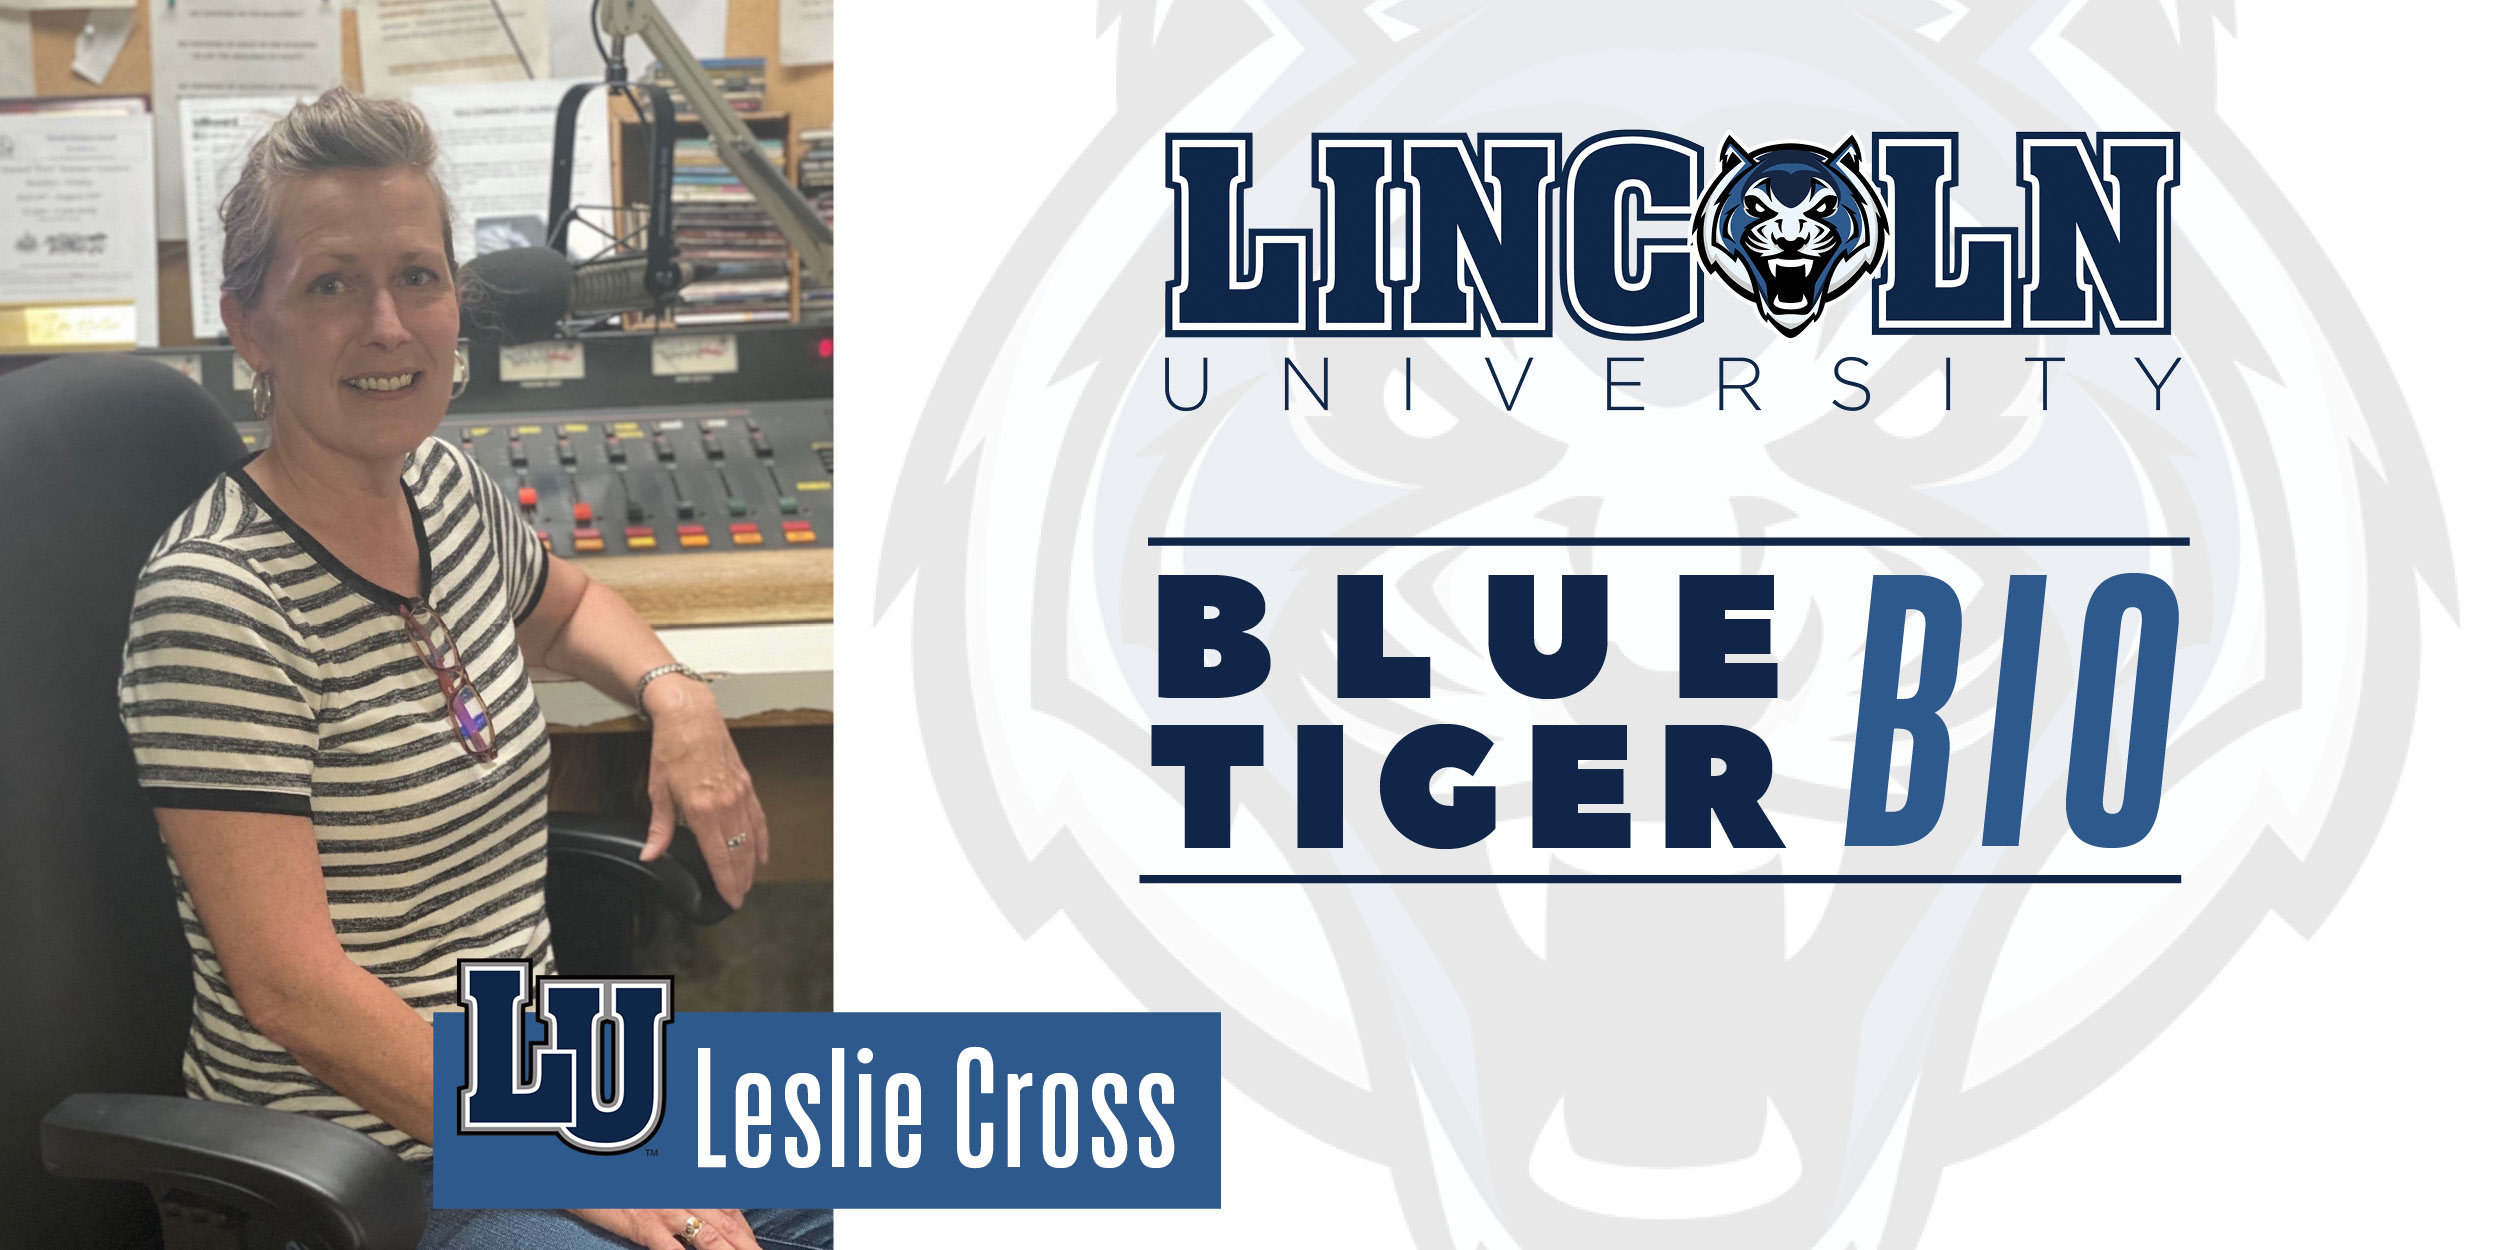 Leslie Cross, adjunct faculty member in the Lincoln University Department of Journalism